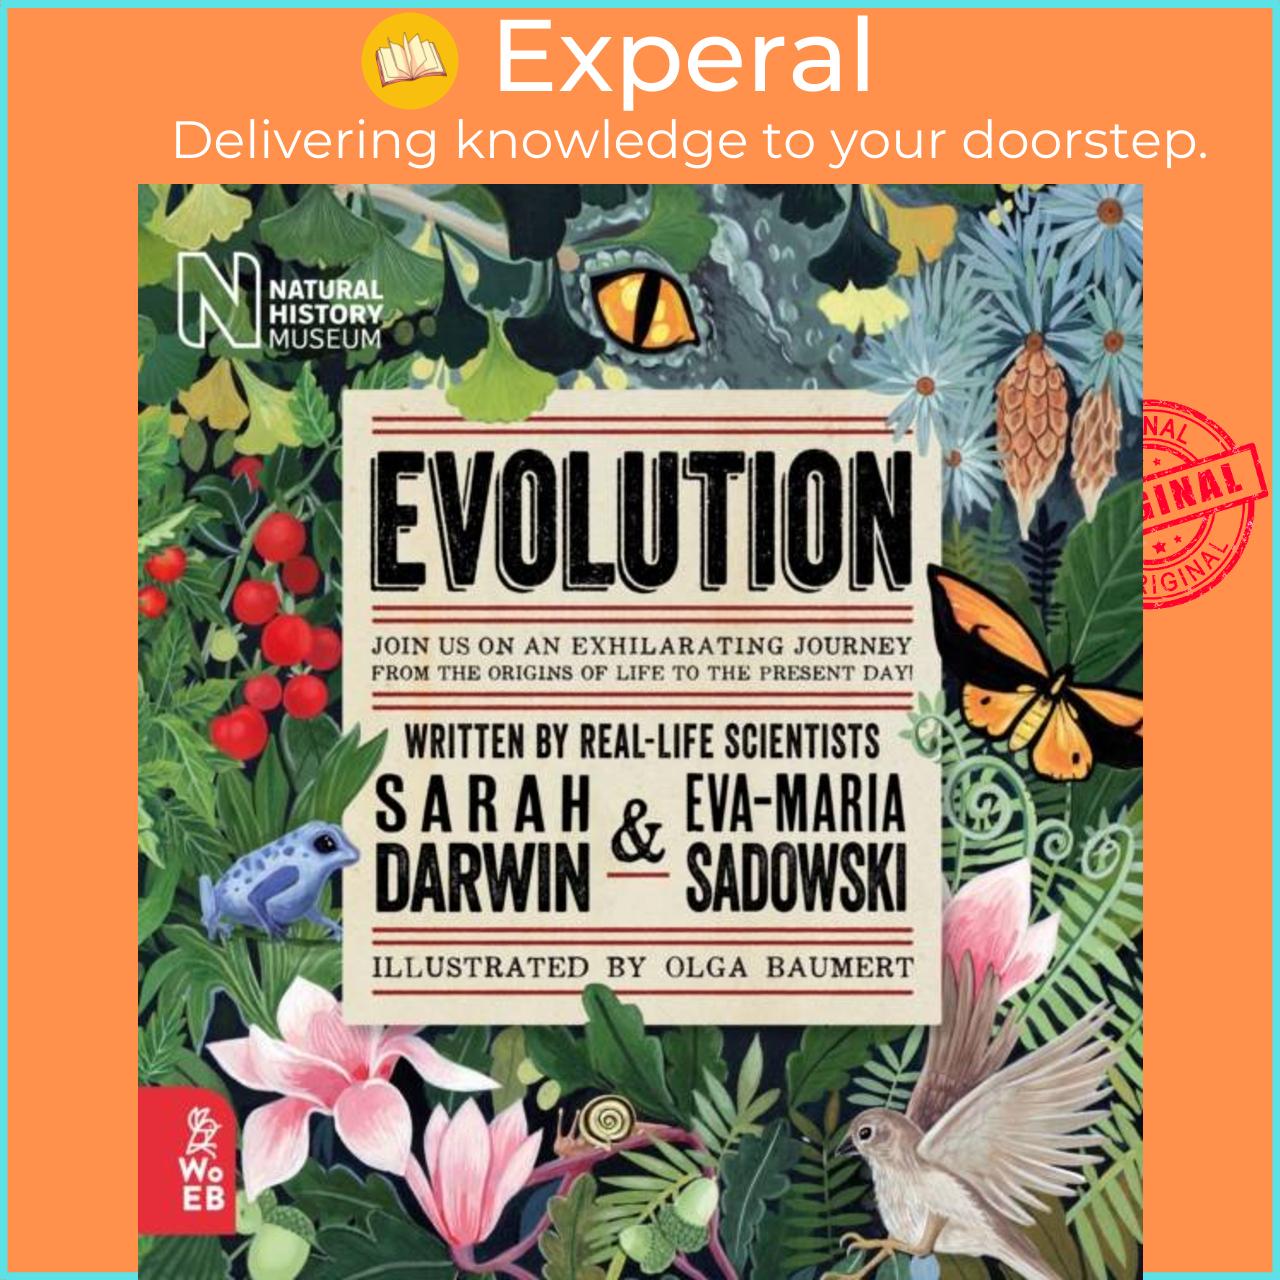 Sách - Evolution by Sarah Darwin (UK edition, hardcover)